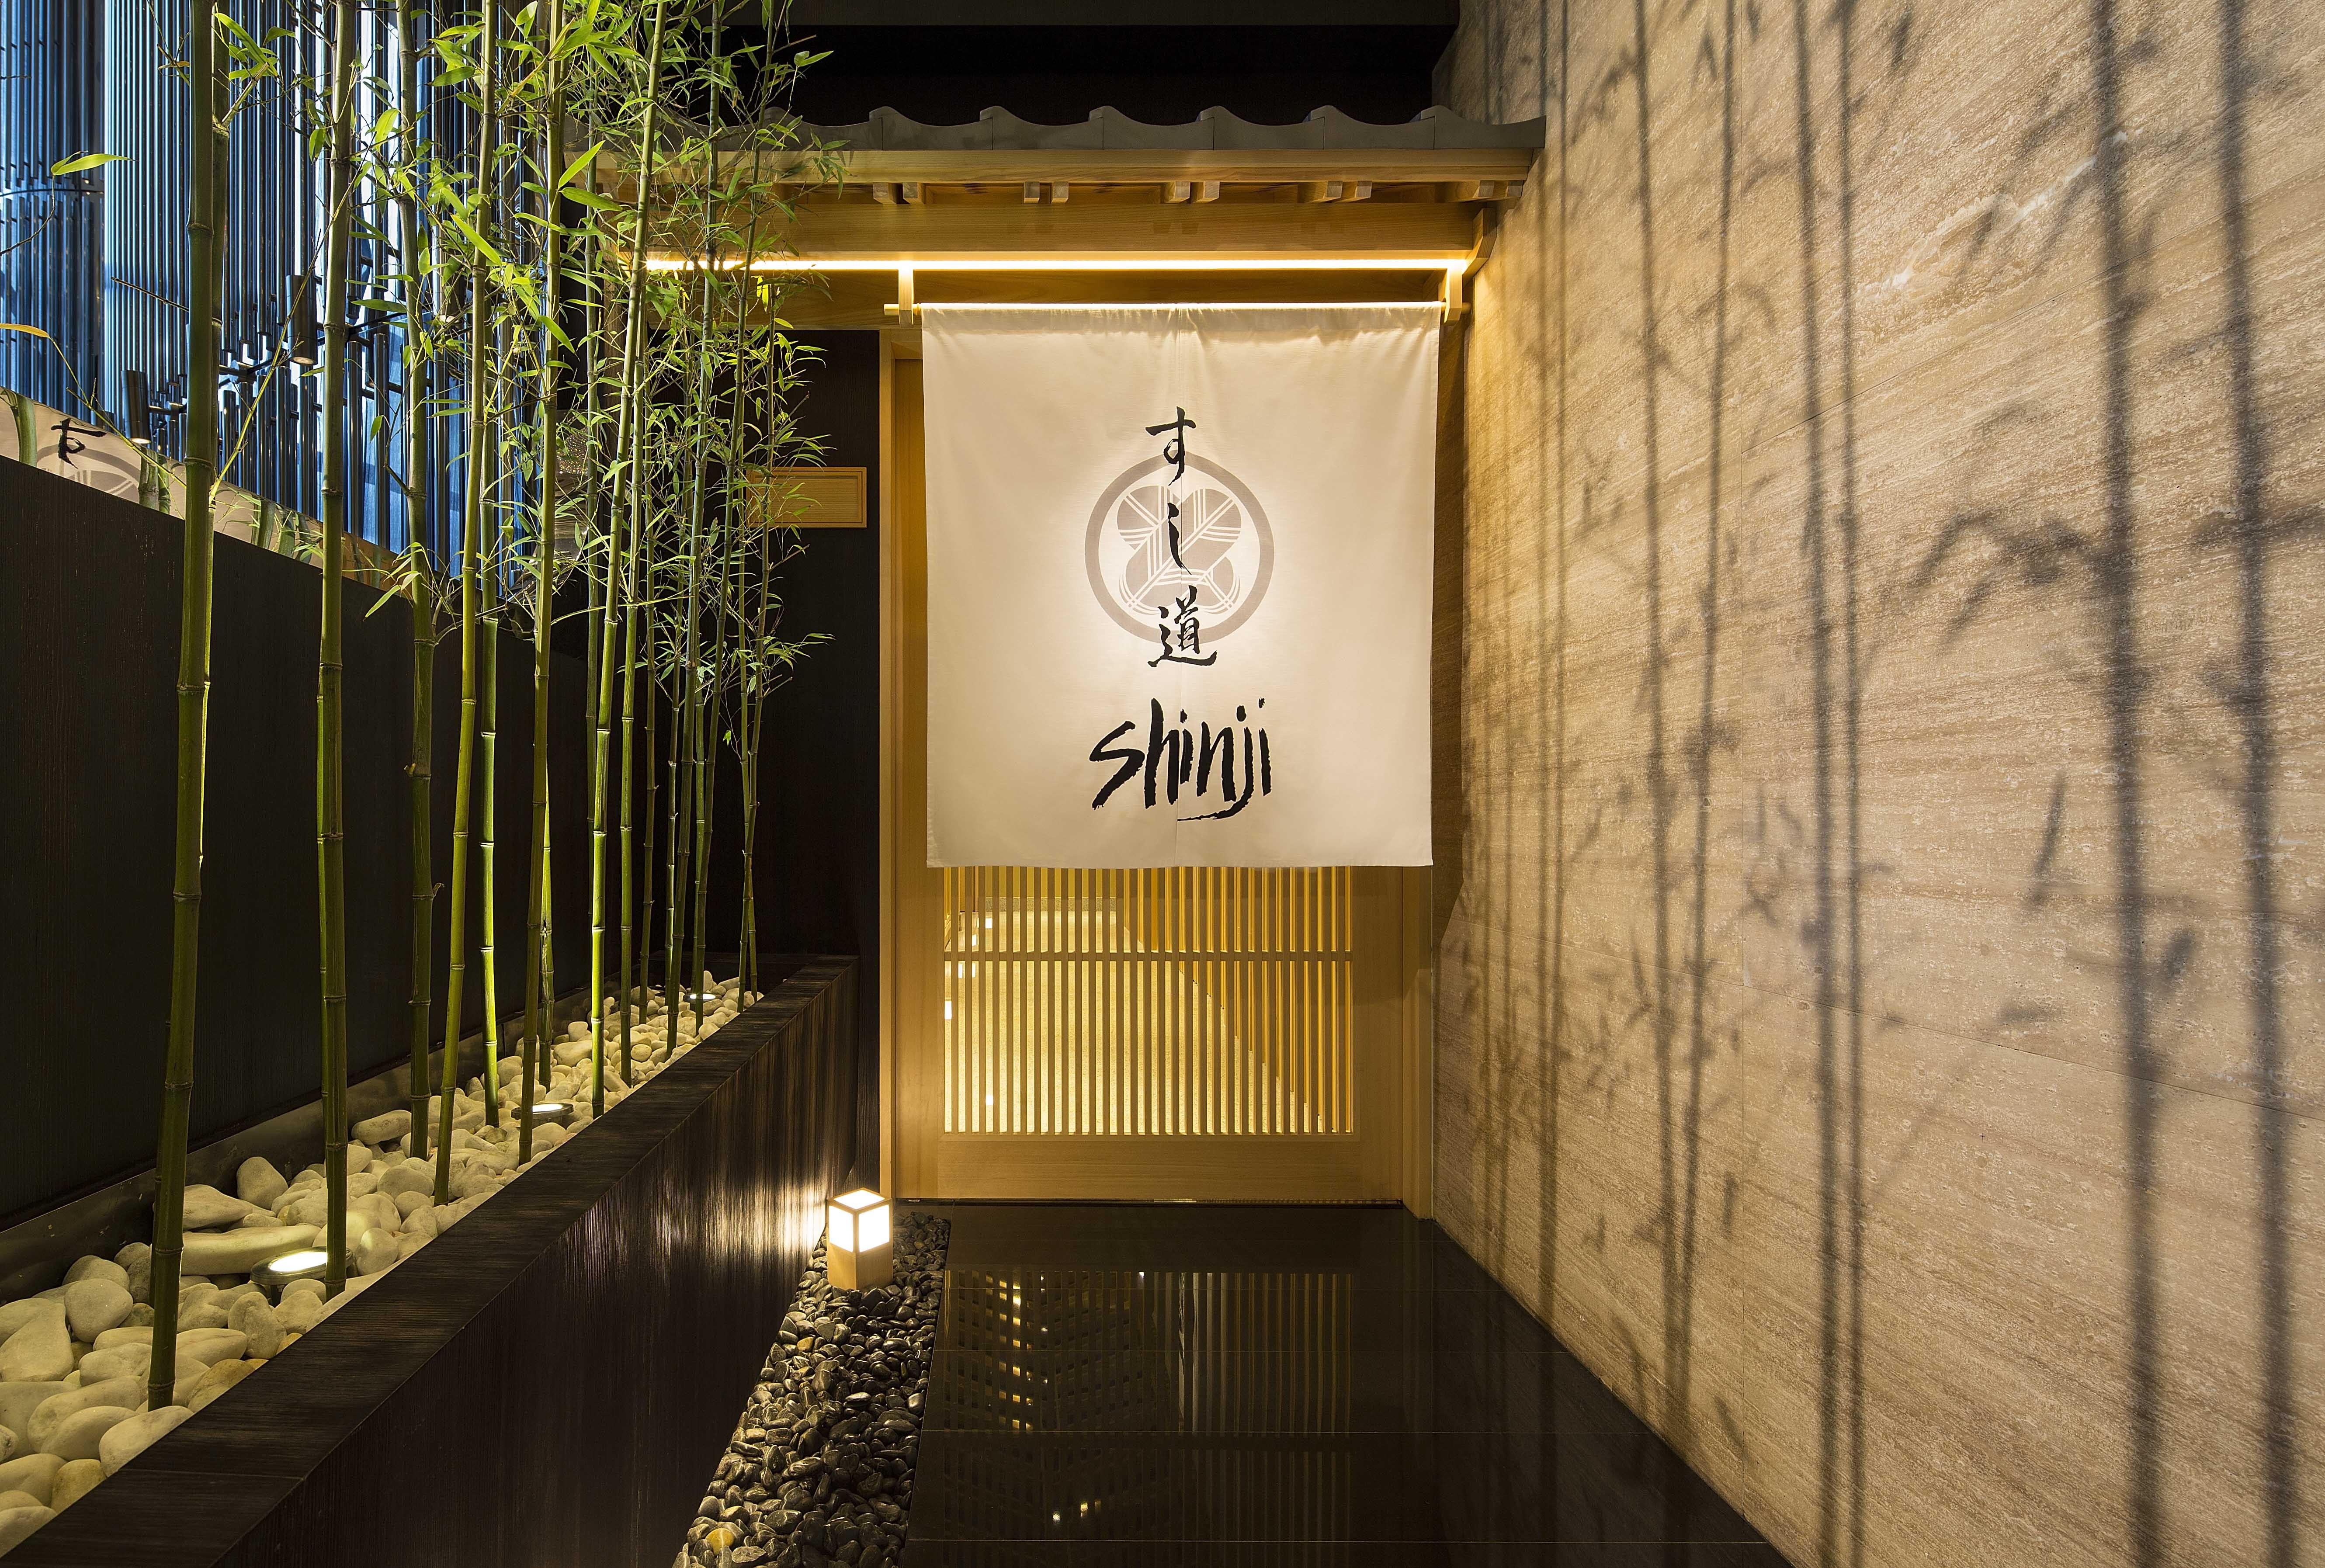 The decor at Shinji by Kanesaka is minimalist and tranquil. Photos: handouts